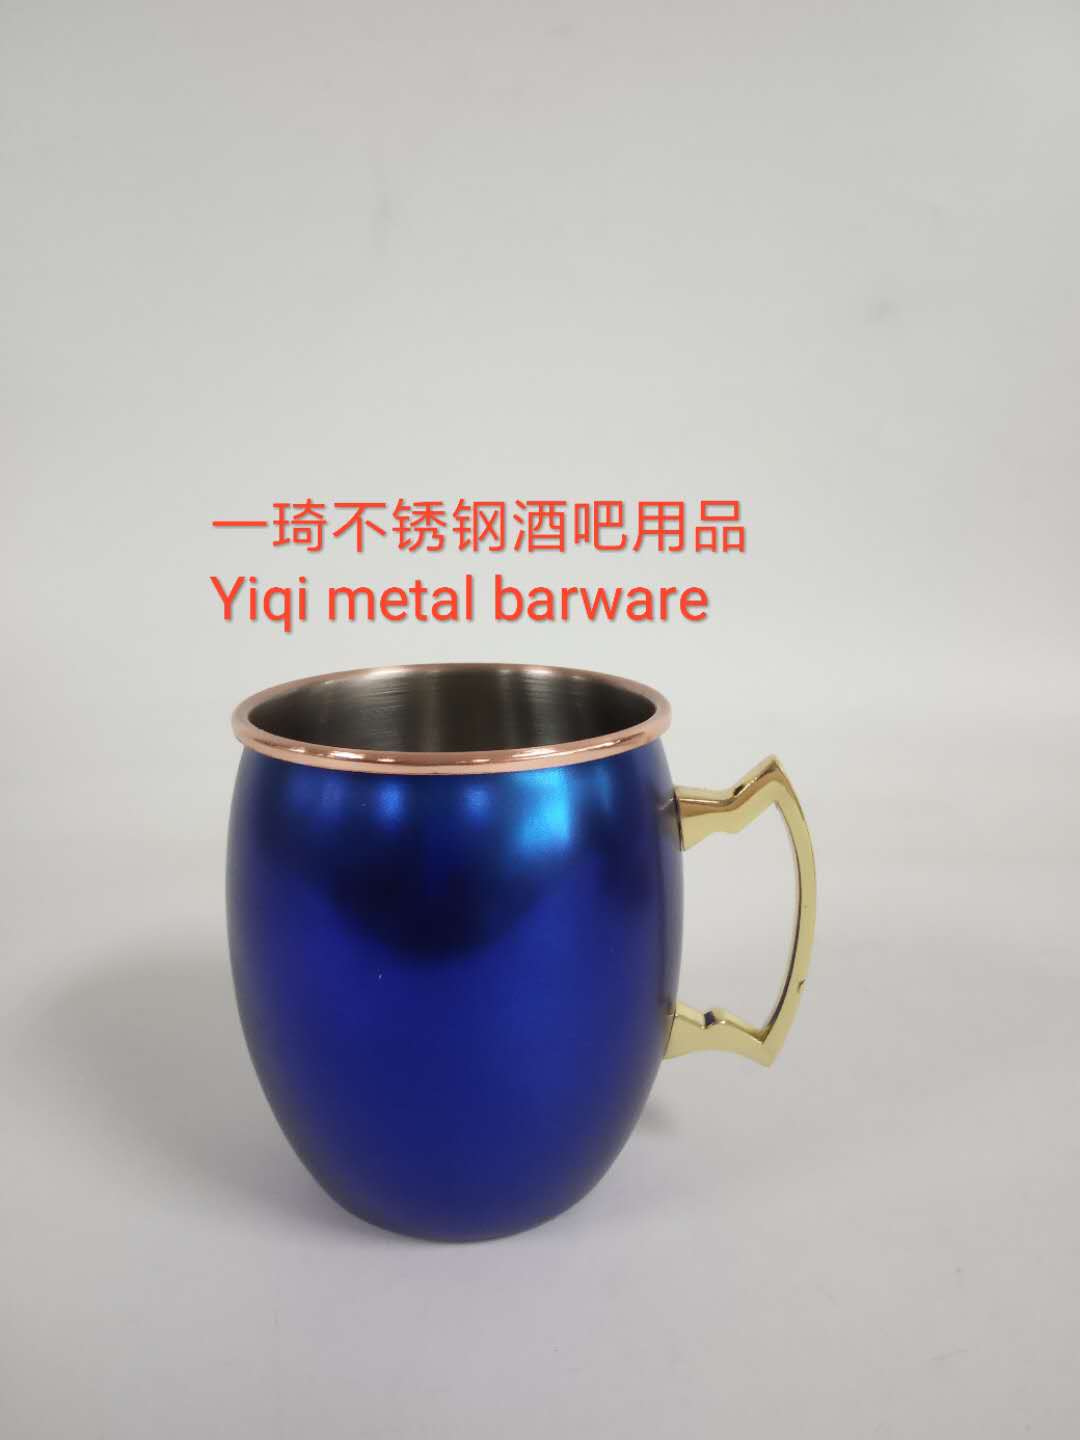 Taishan yiqi metal product Co.,Ltd